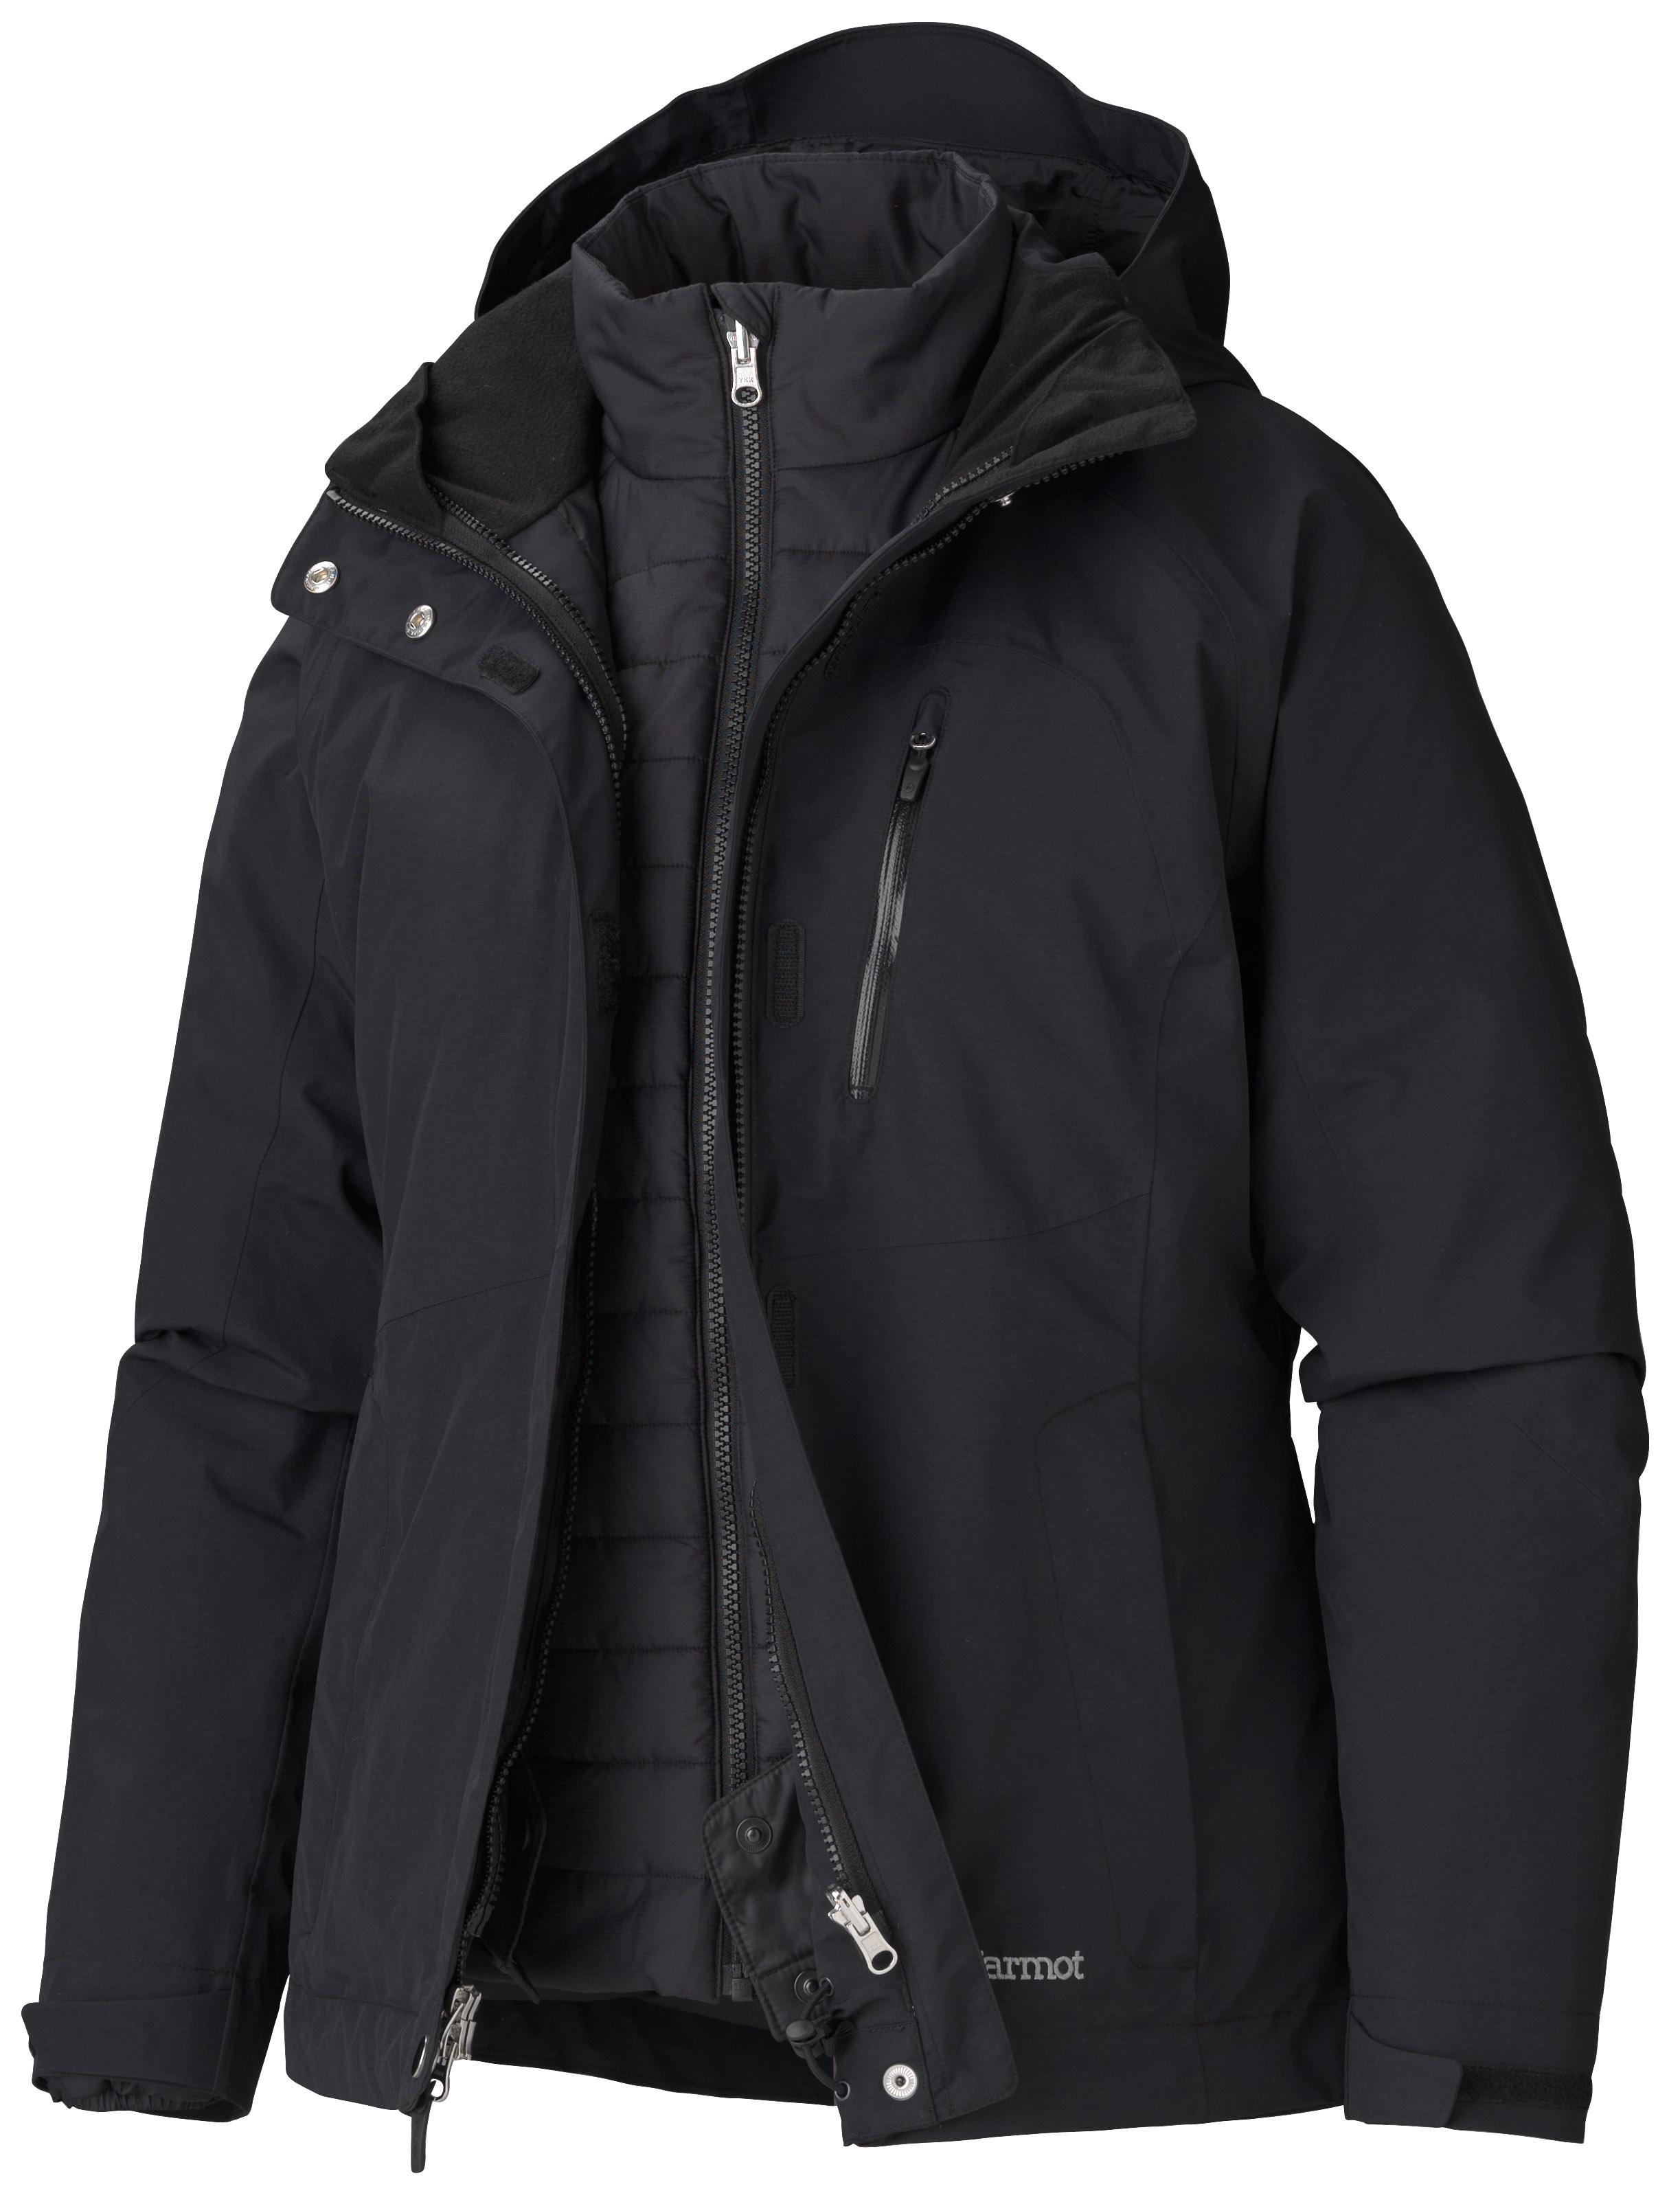 Foto Marmot Alpen Component Jacket Lady Black (Modell 2013/14)